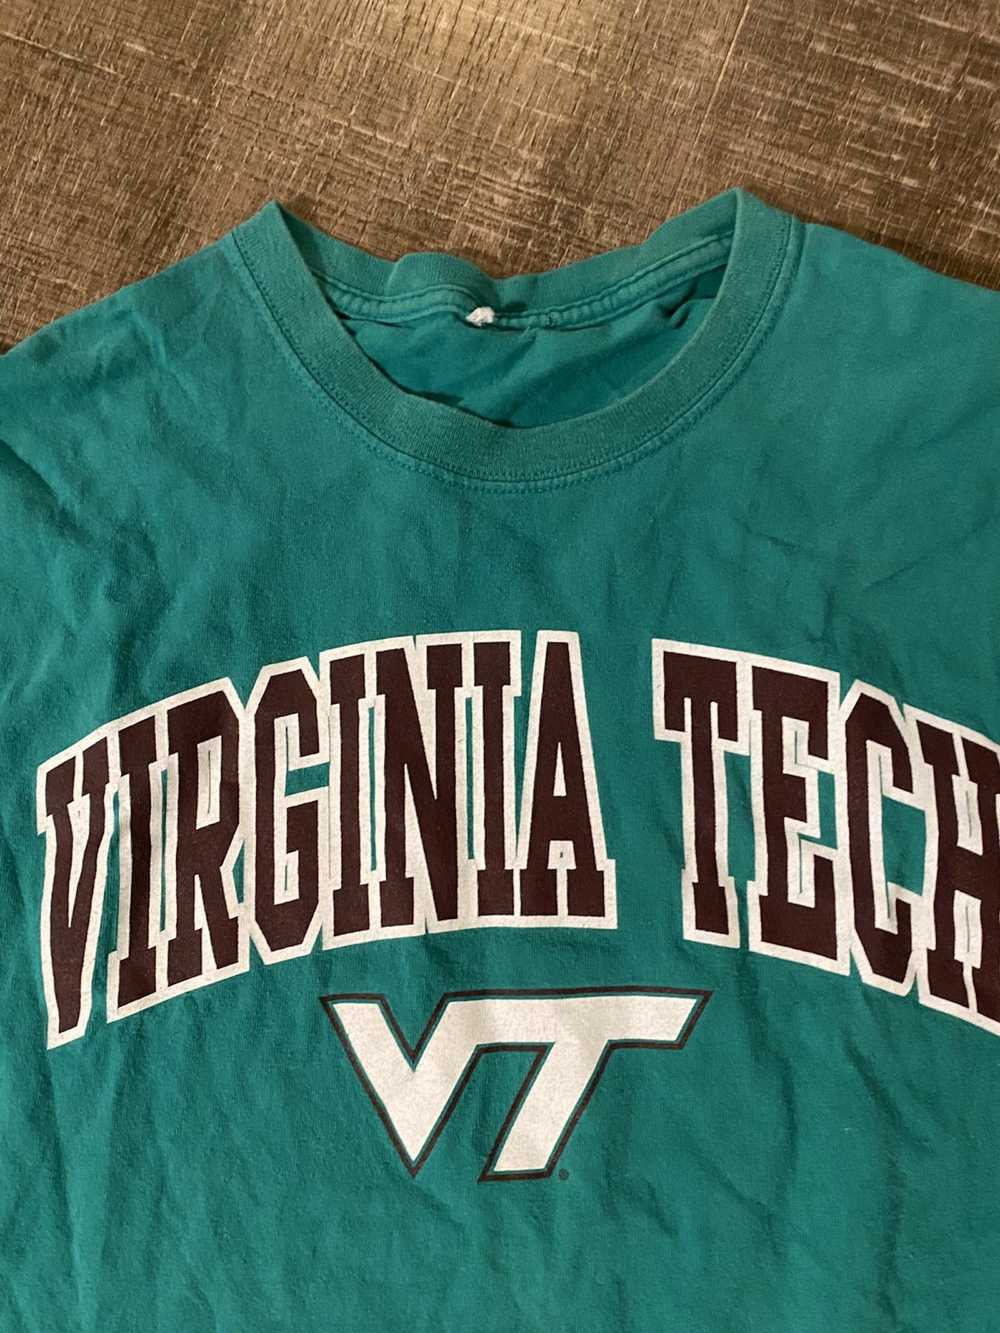 Vintage Vintage Virginia Tech short sleeve green - image 2